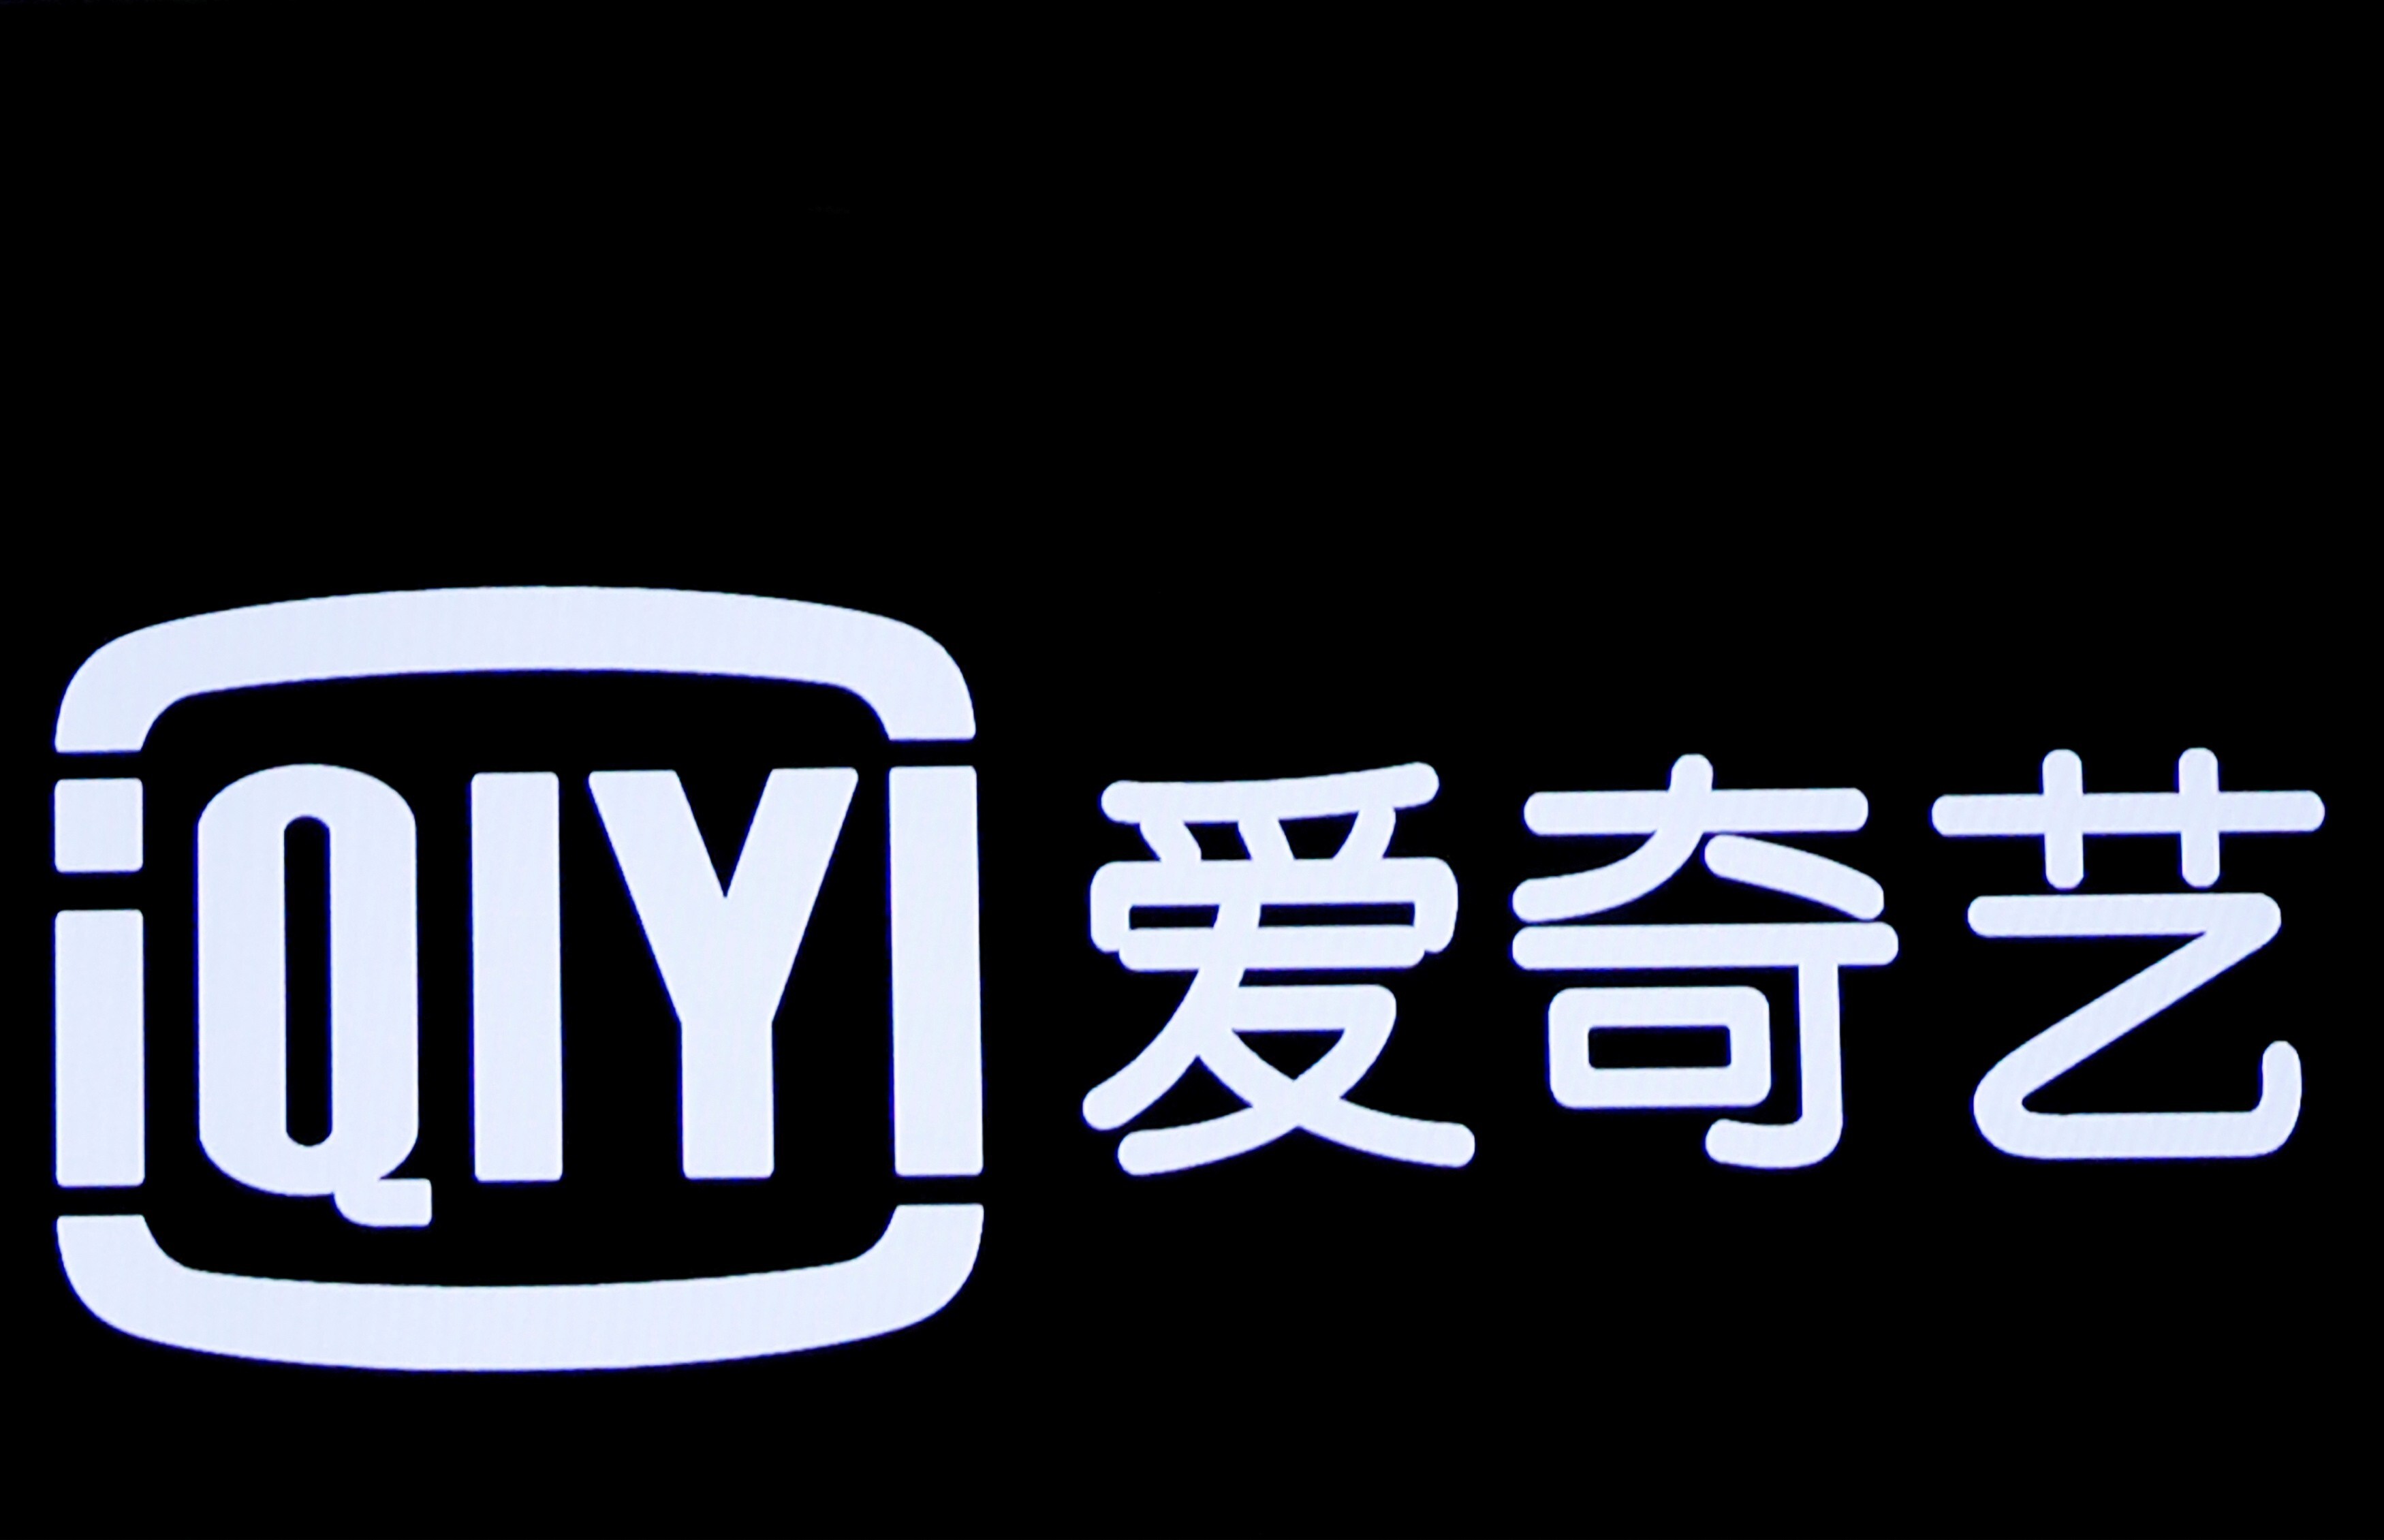 xiaomi logo font roblox